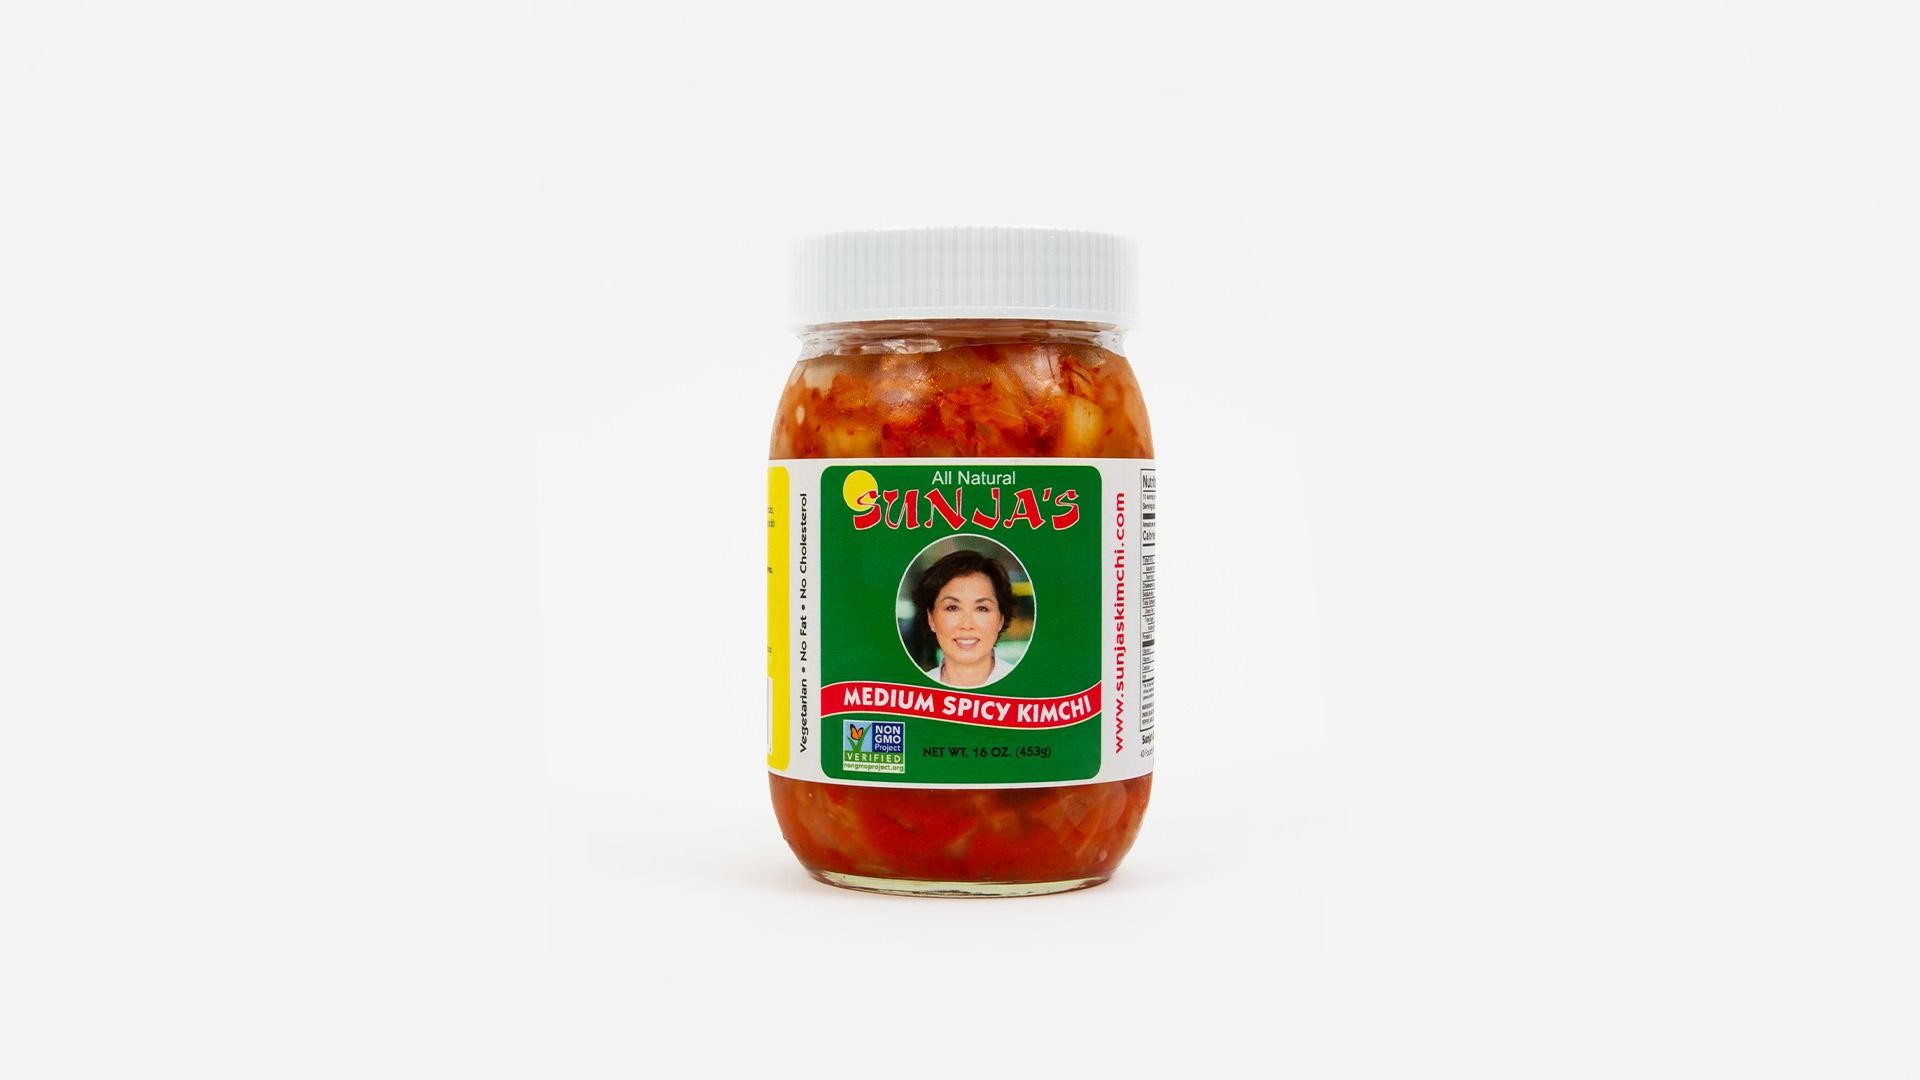 Sunjas Medium Spicy Kimchi